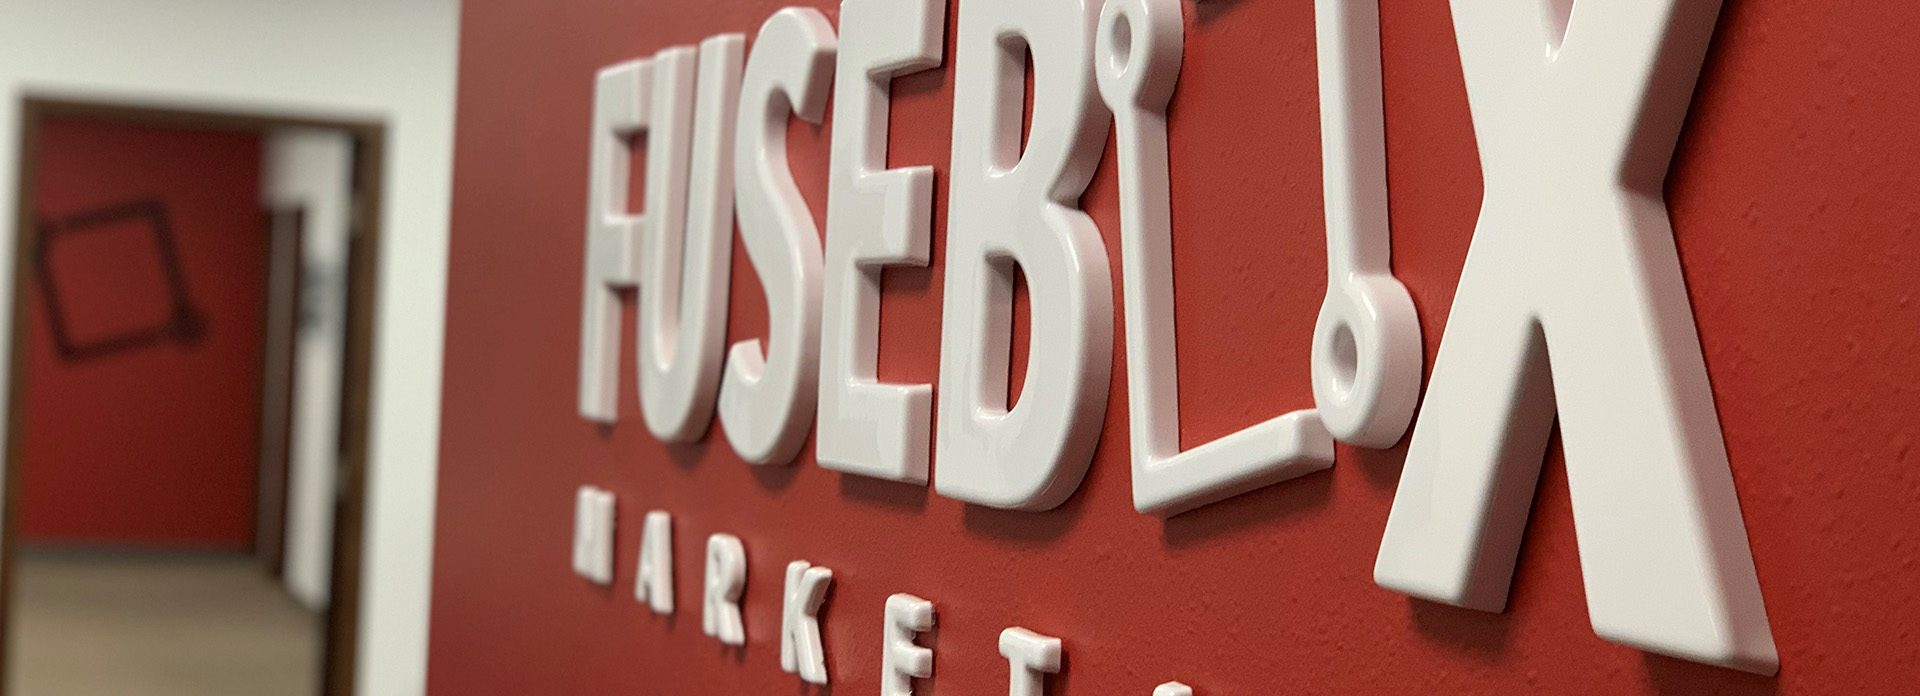 Fusebox Marketing Office